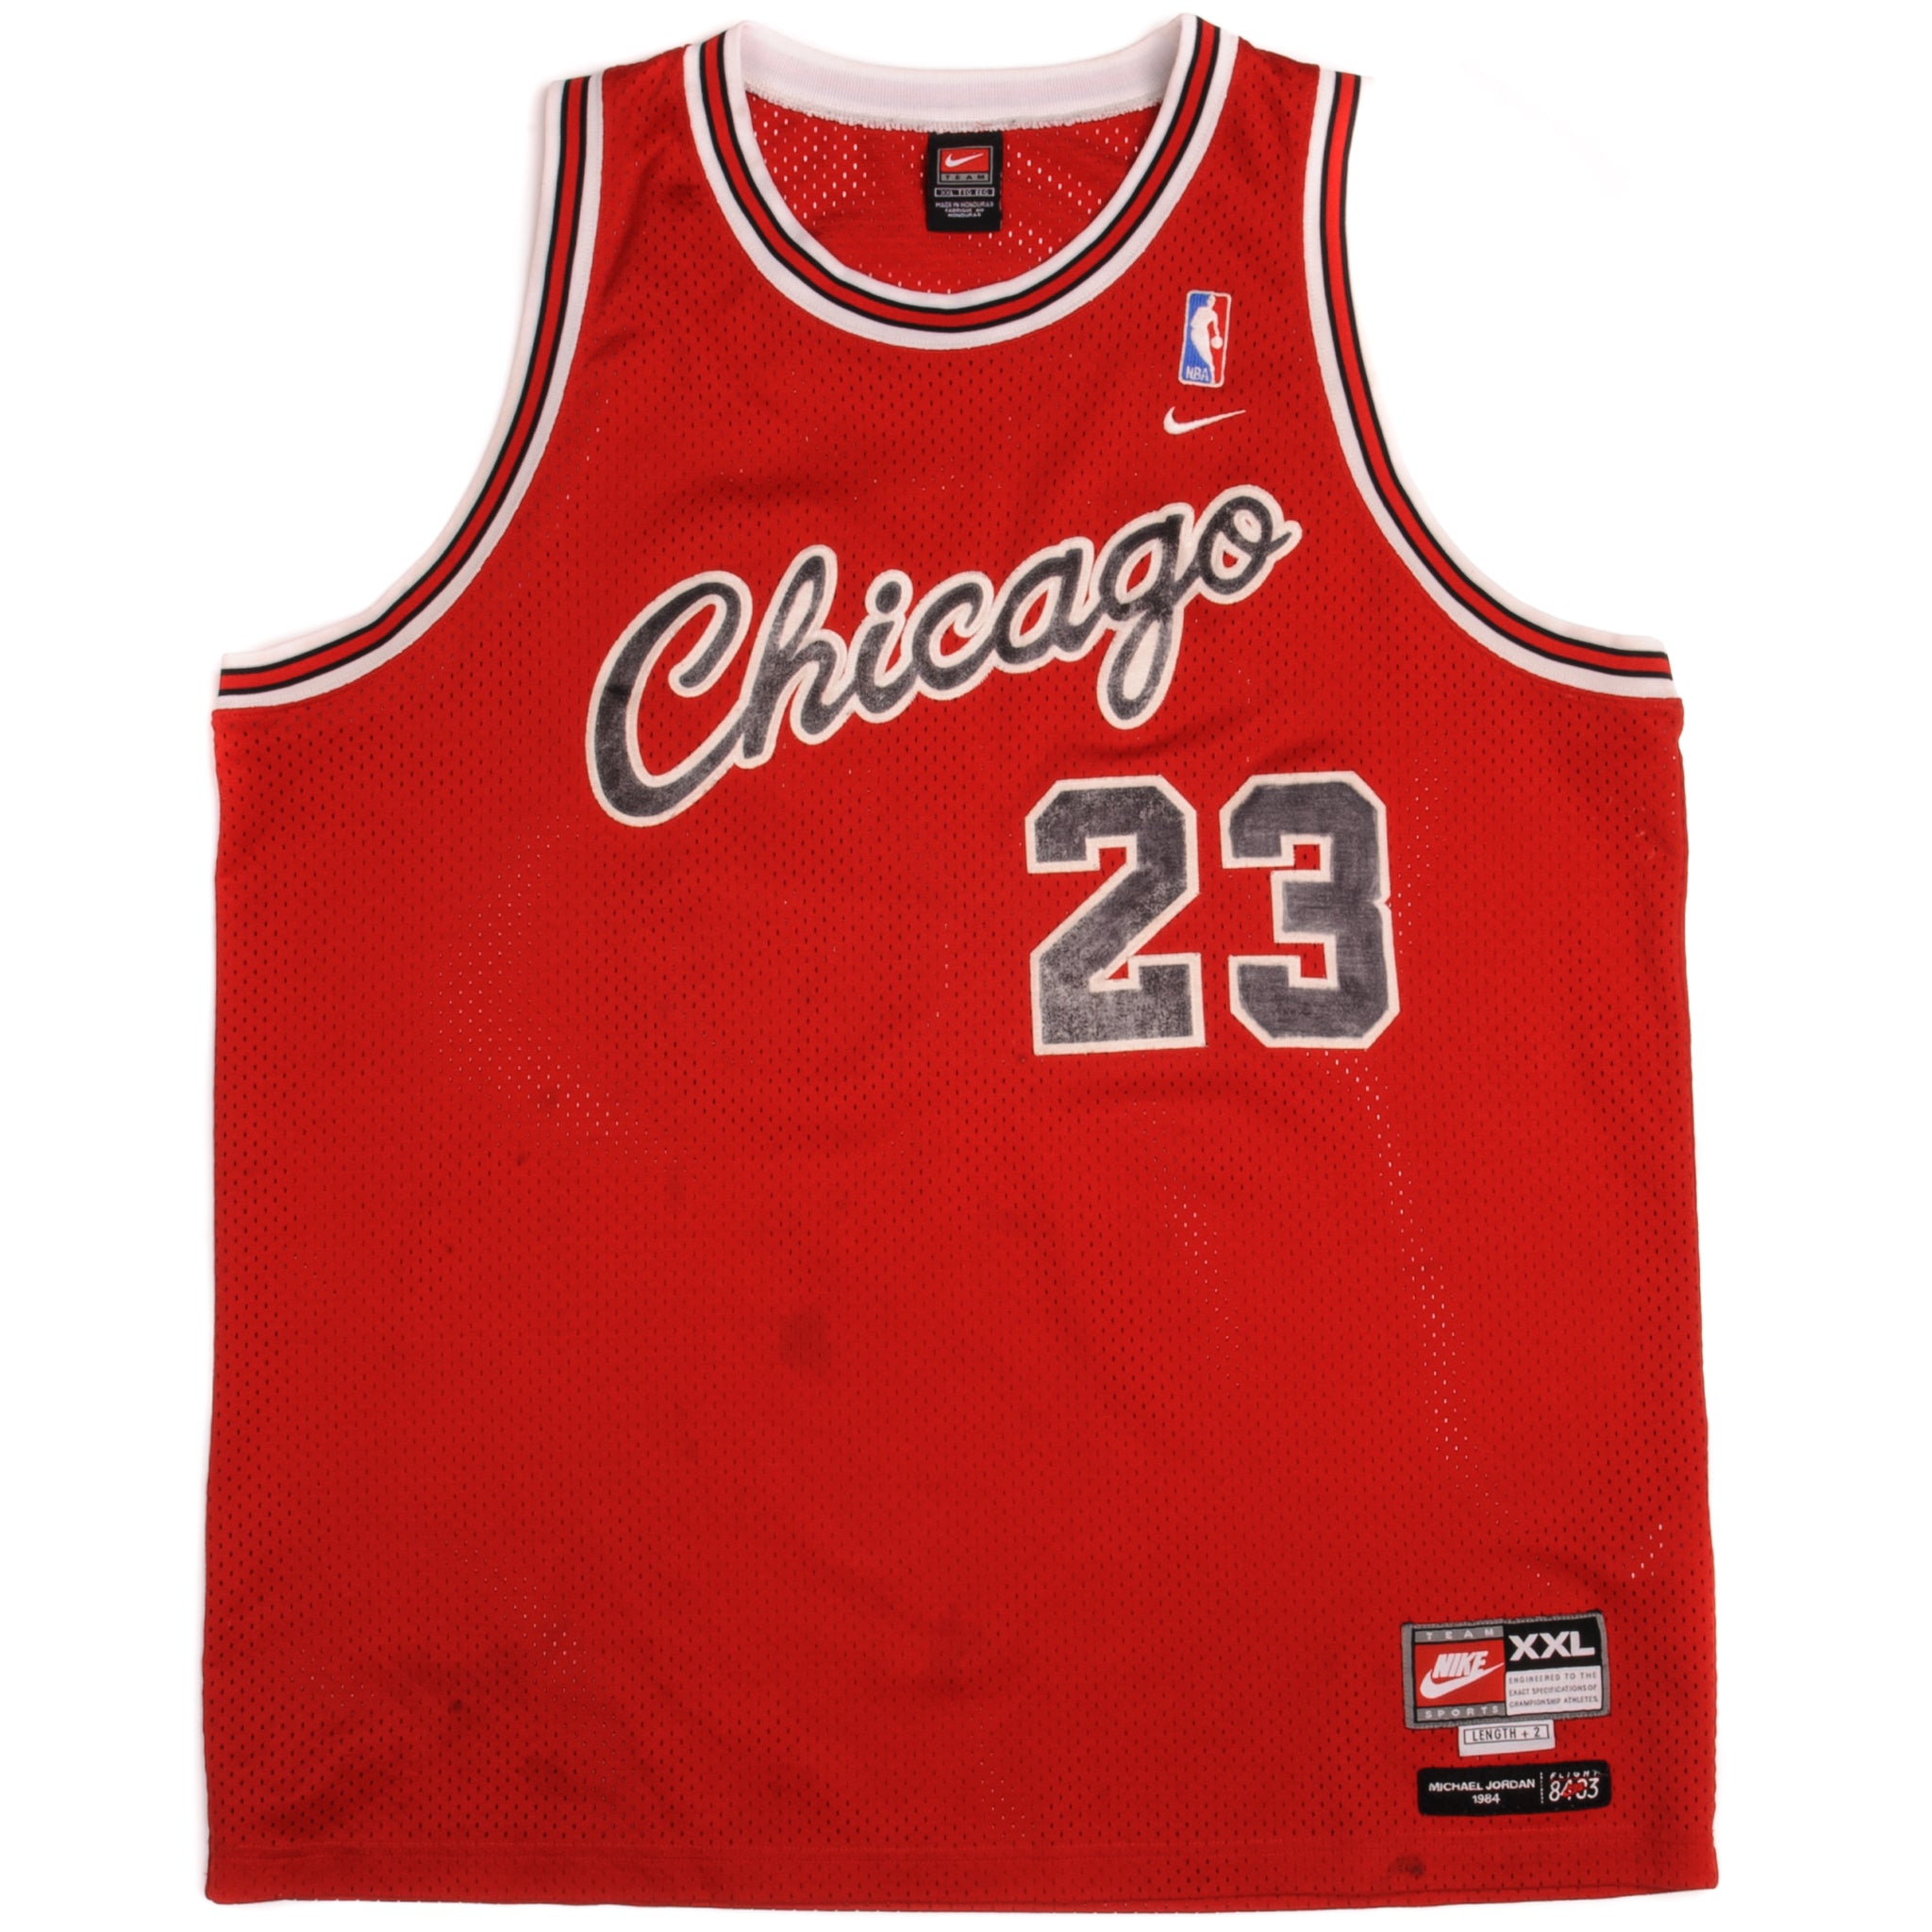 Blank Chicago Bulls Jerseys, Vintage Bulls